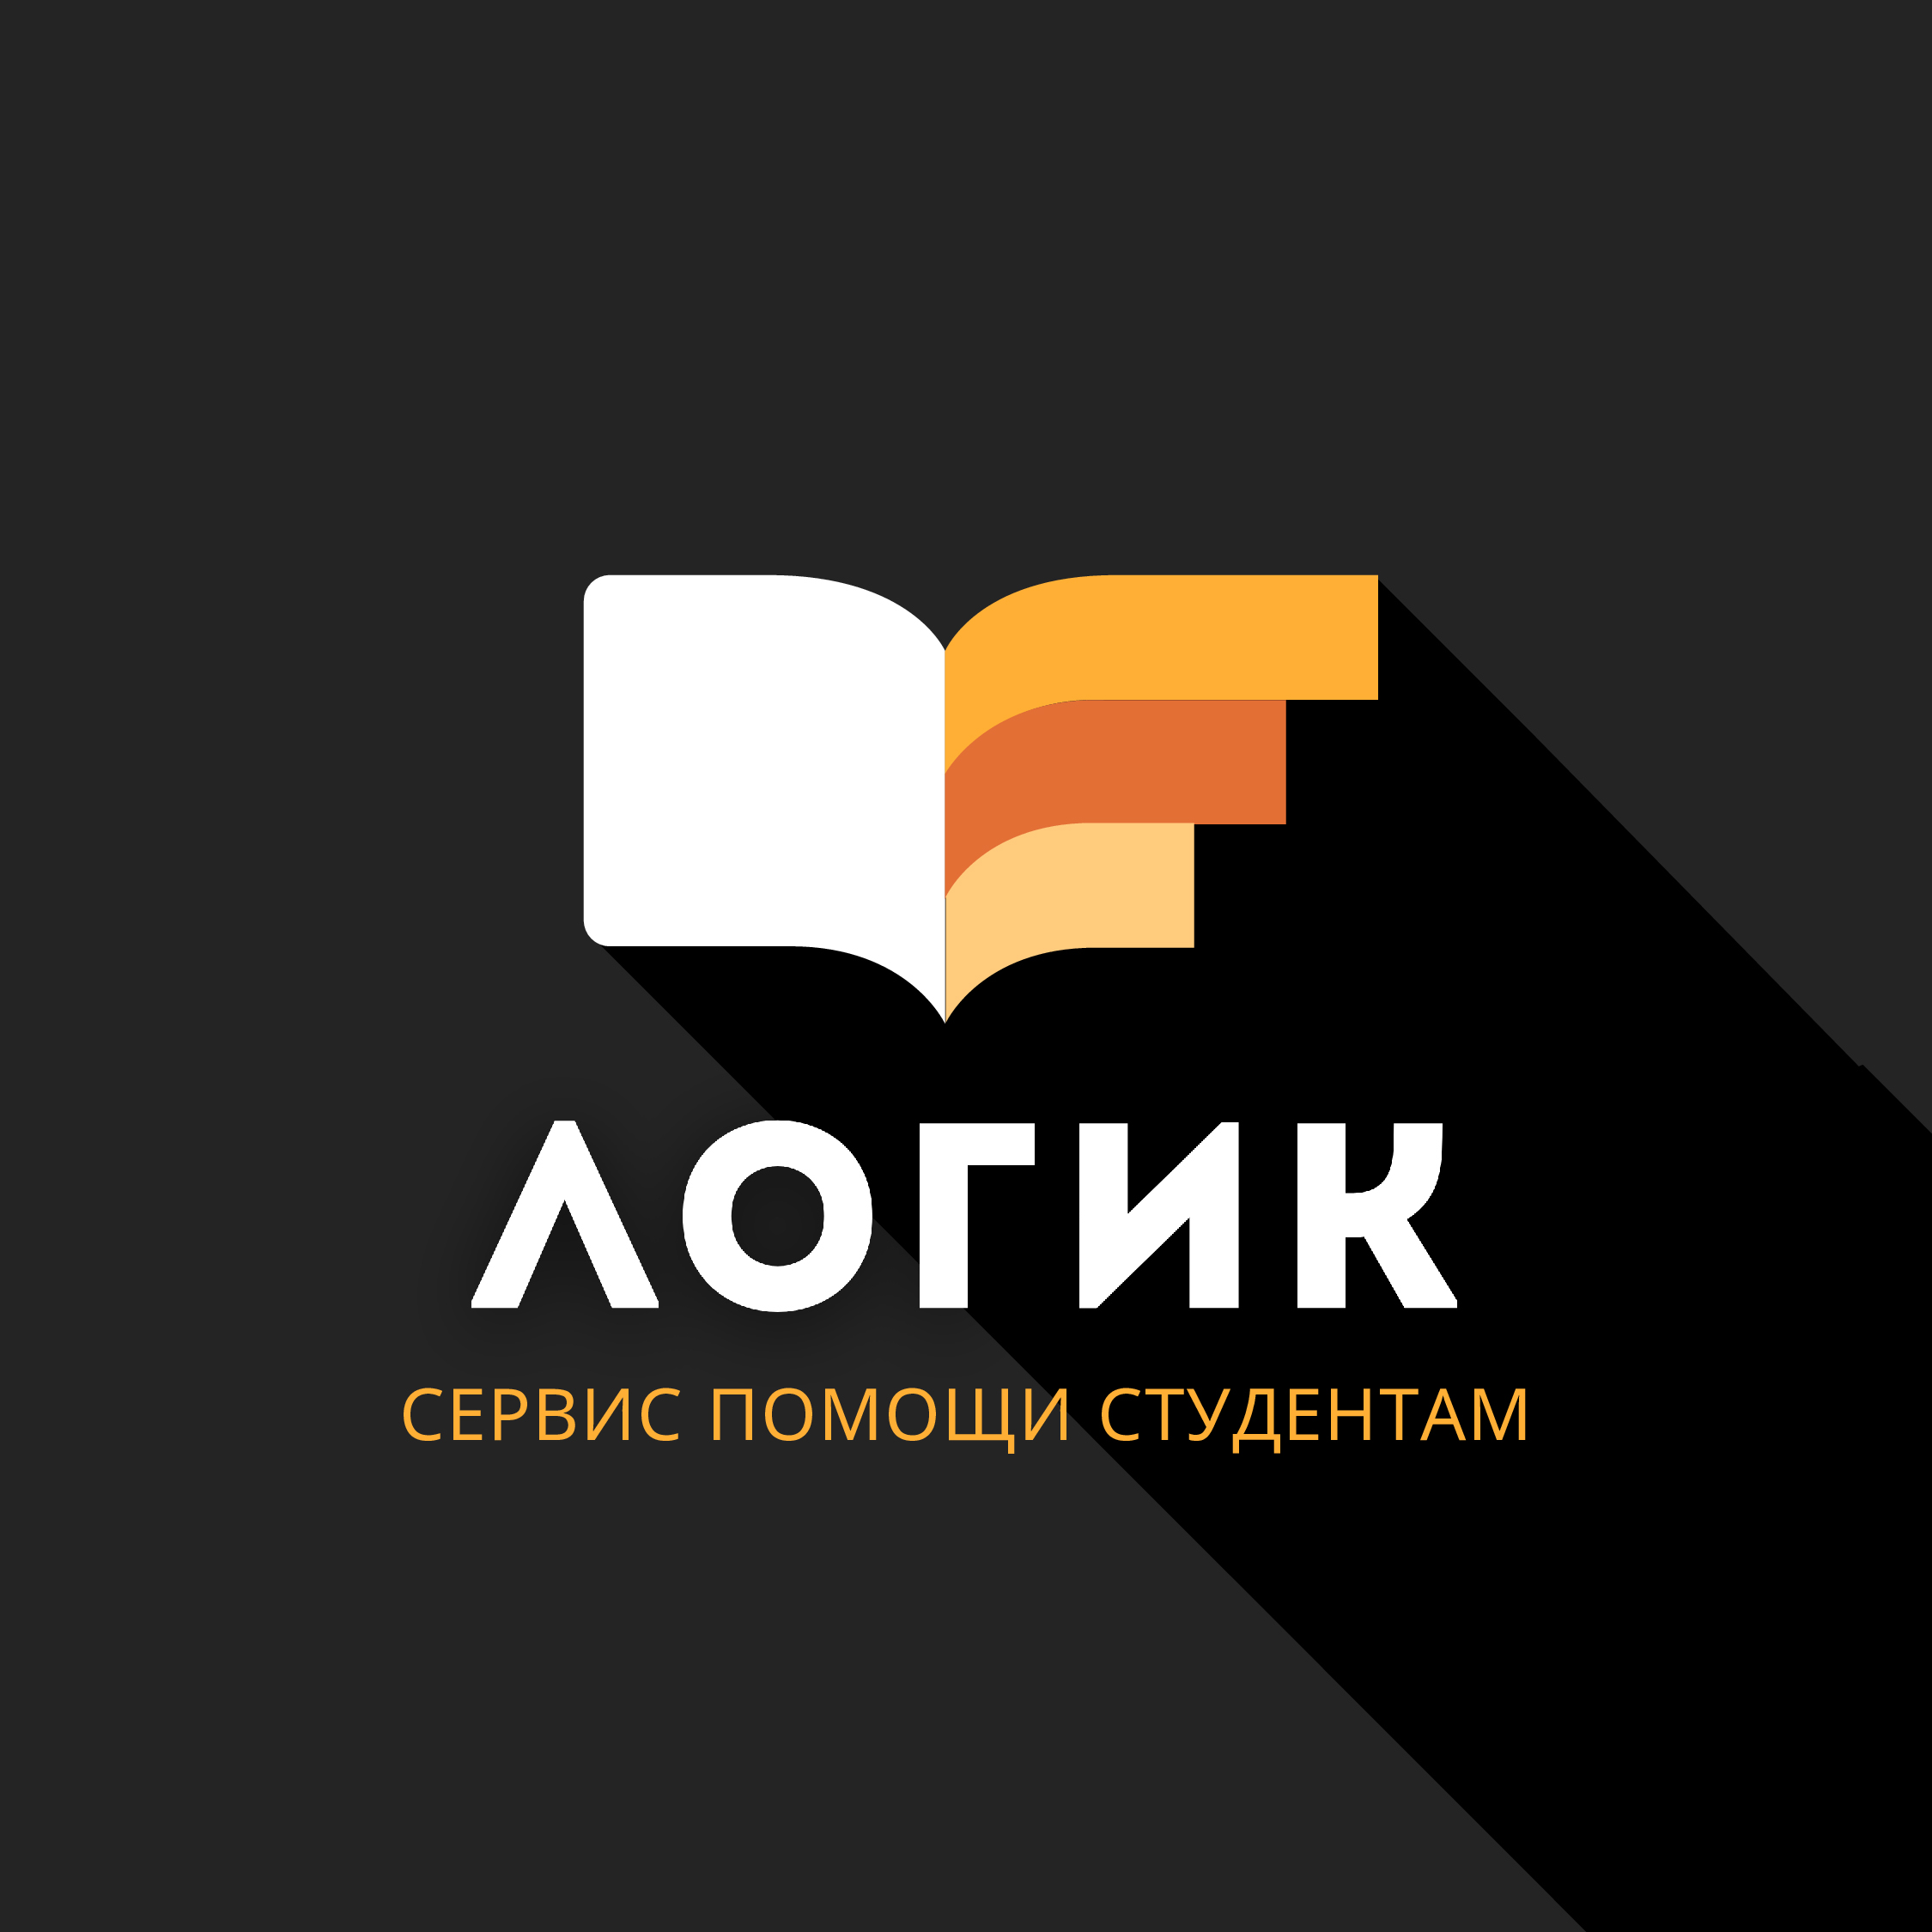 Логик — сервис помощи студентам и аспирантам в Астрахани